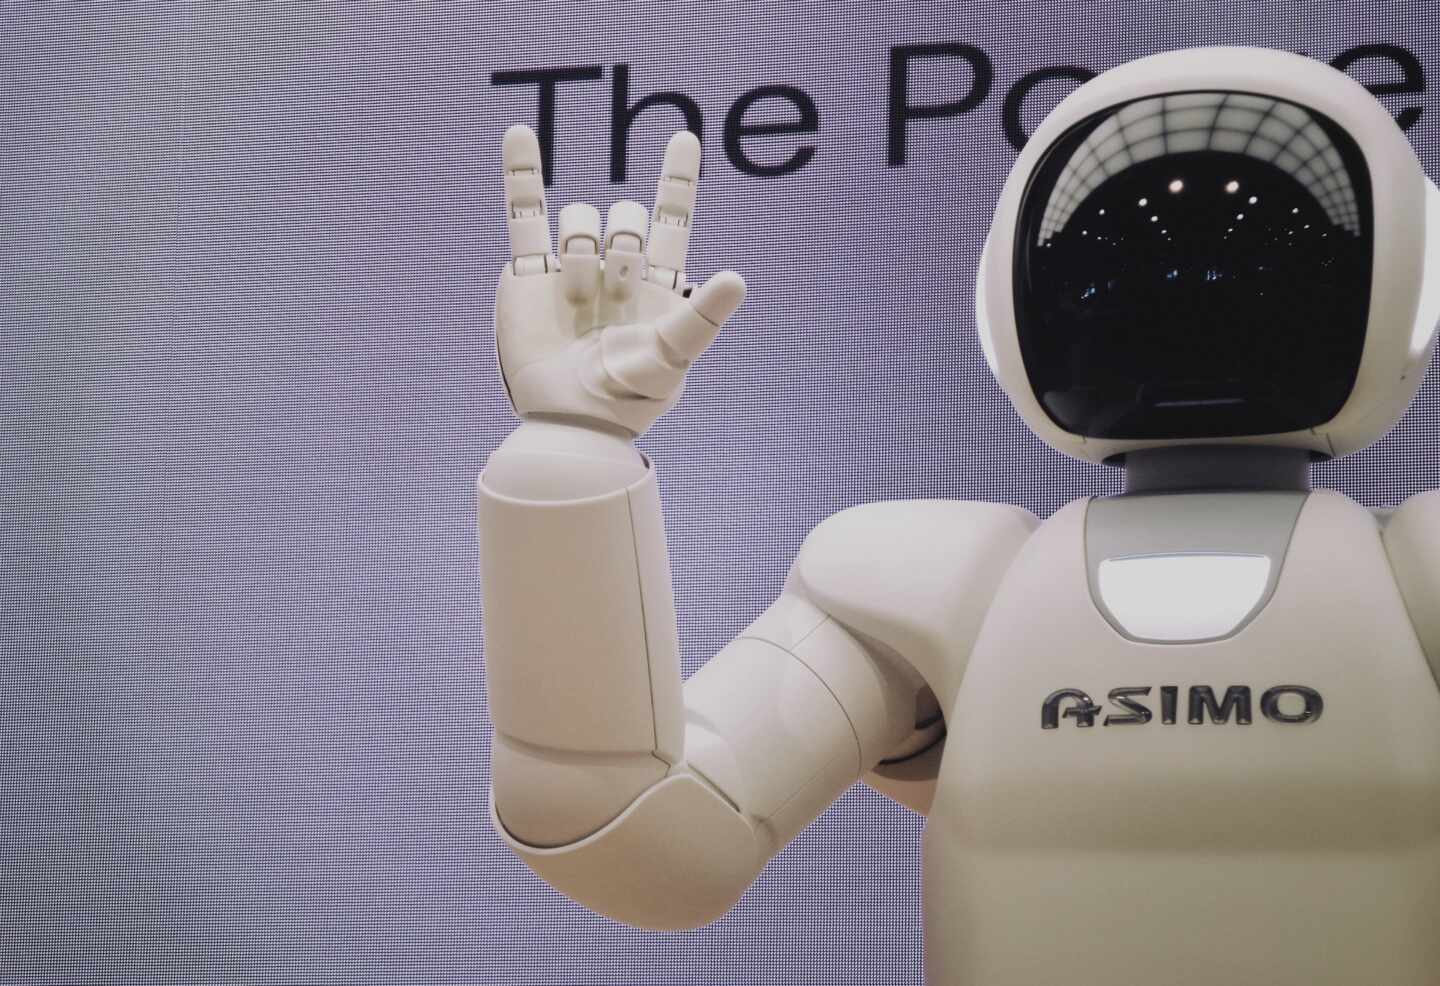 Un robot realizando un saludo